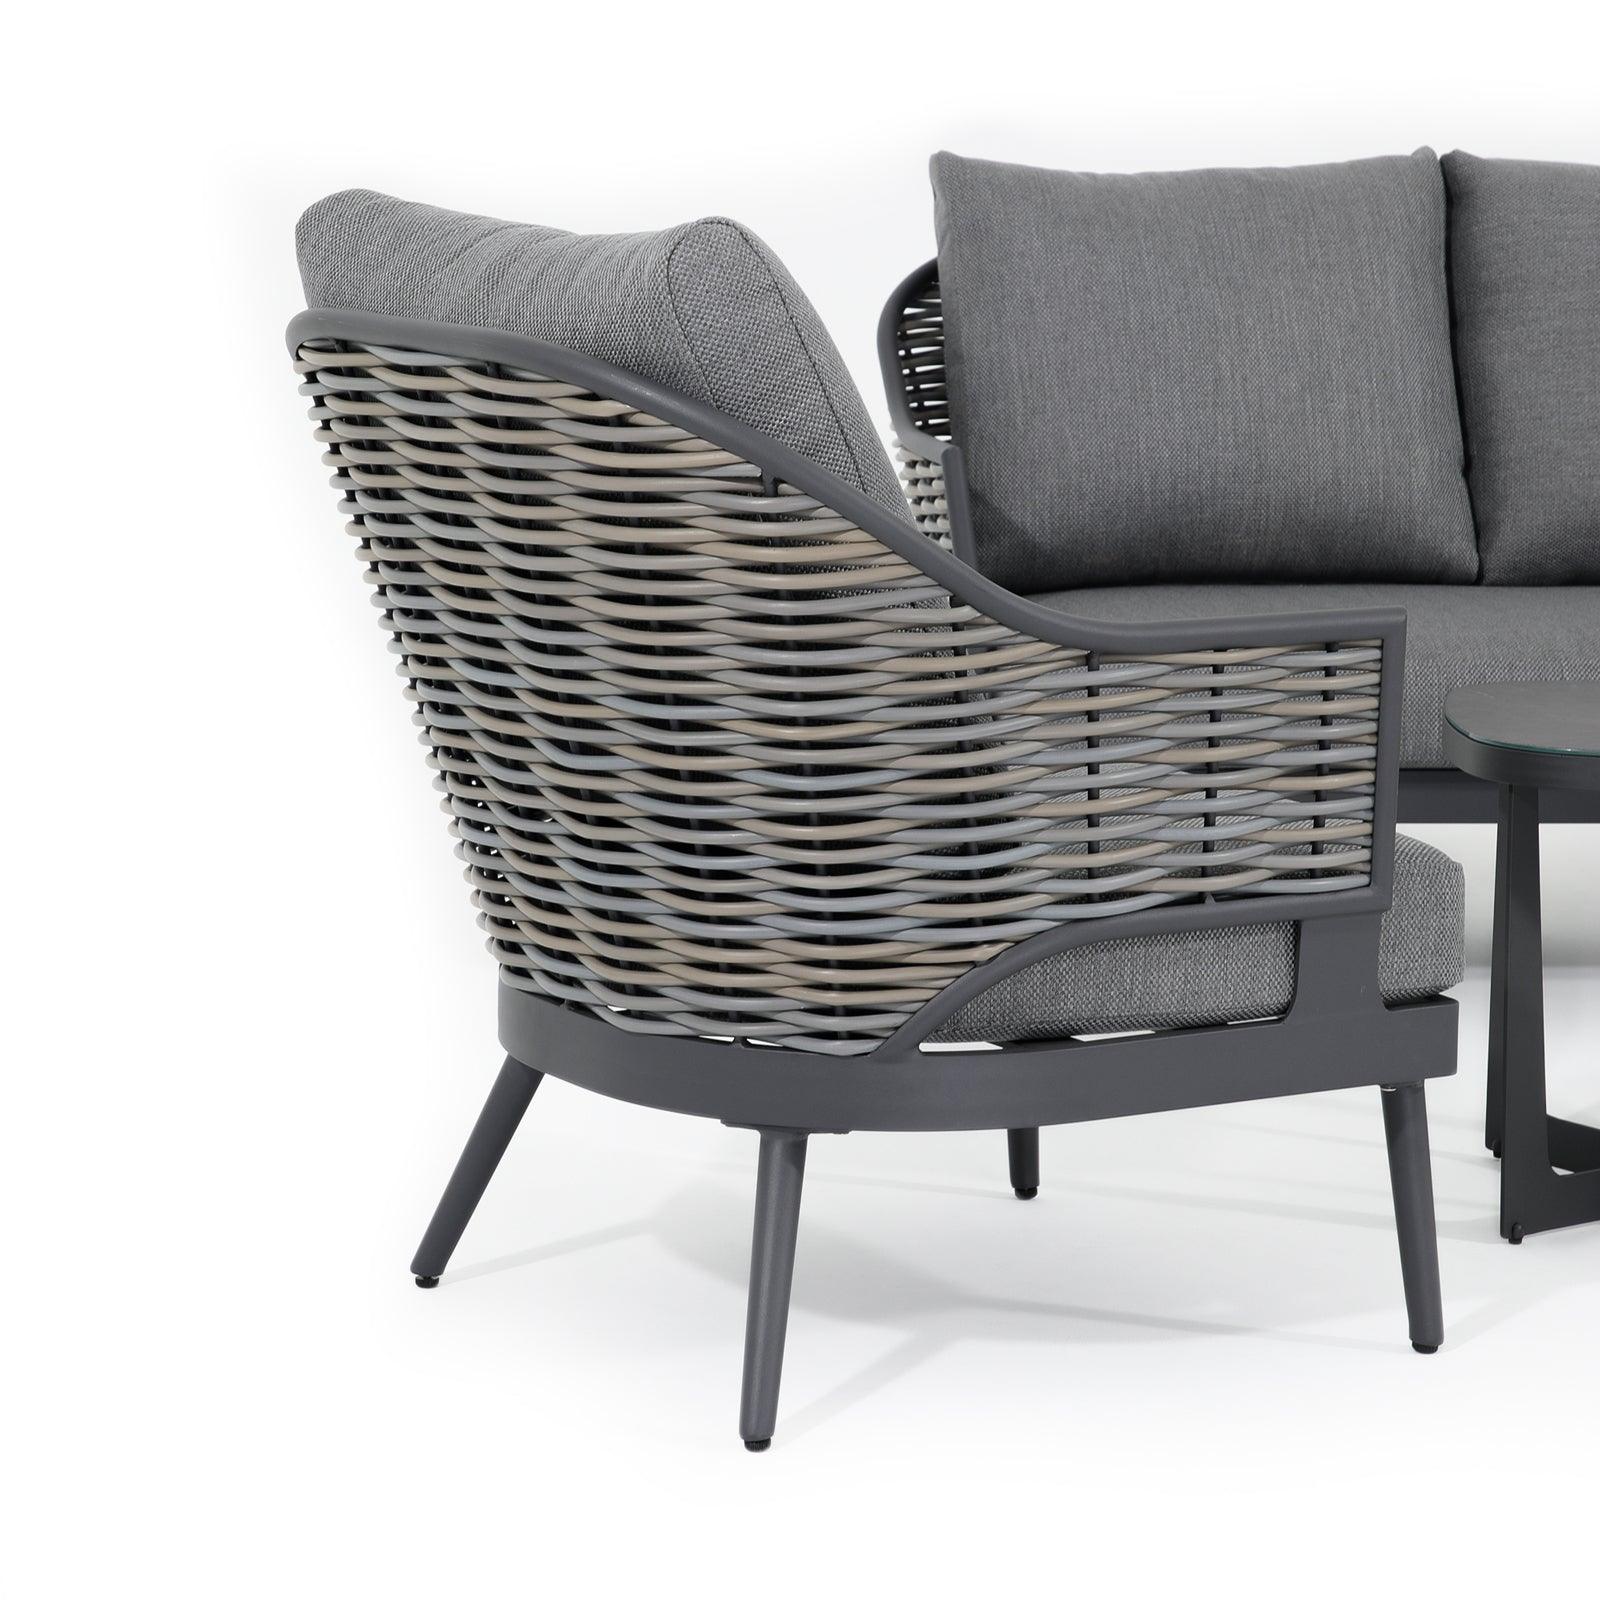 Burano Grey wicker outdoor arm chair with aluminum frame, grey cushions, wicker detail - Jardina Furniture